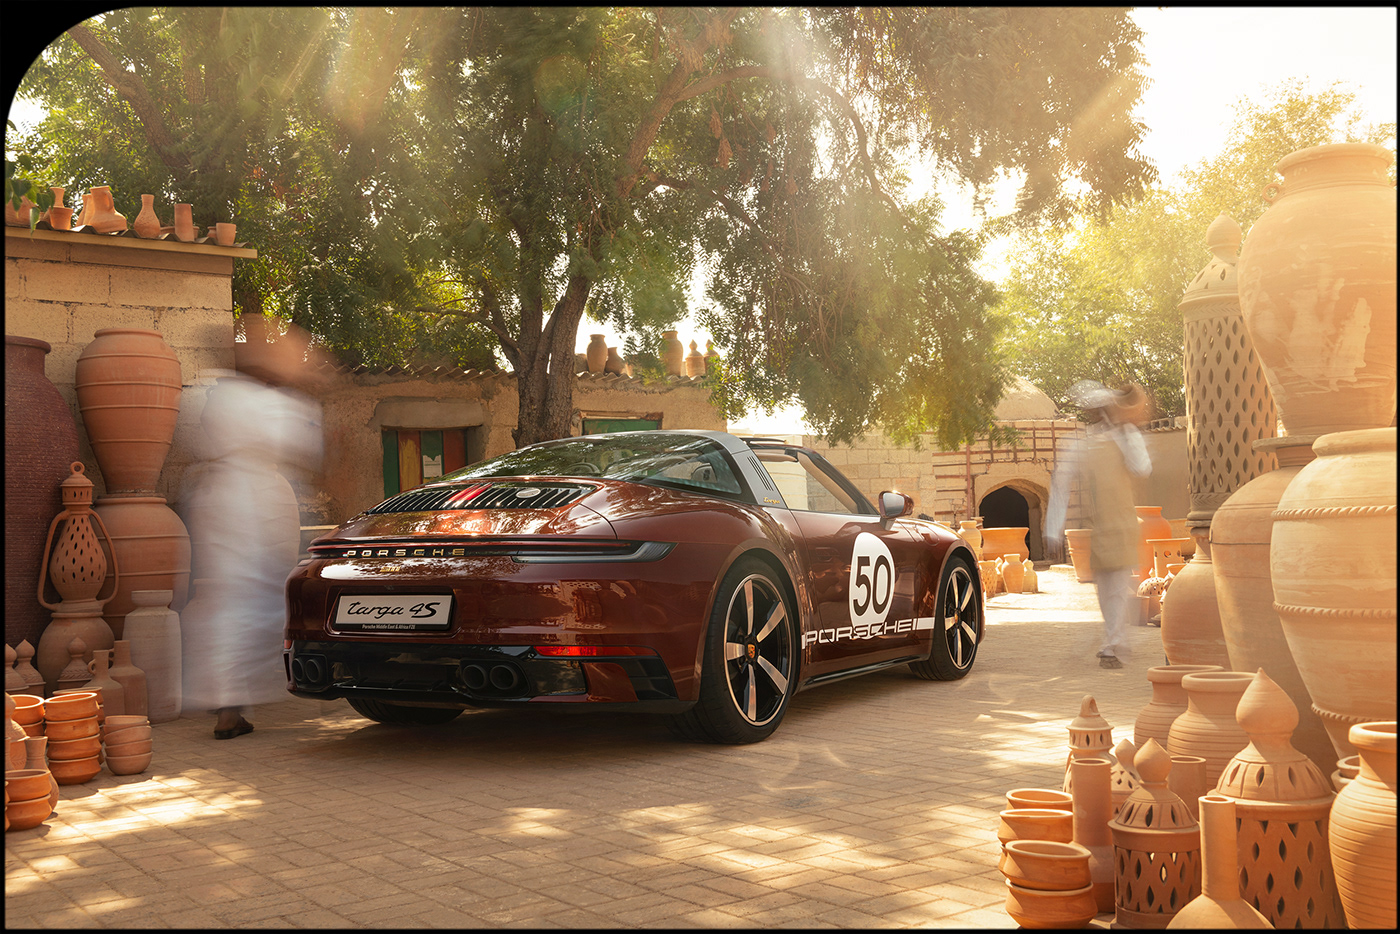 automotive   Outdoor Porsche Porsche 911 porsche design Porsche Targa 911 Post Production static UAE UAE National Day